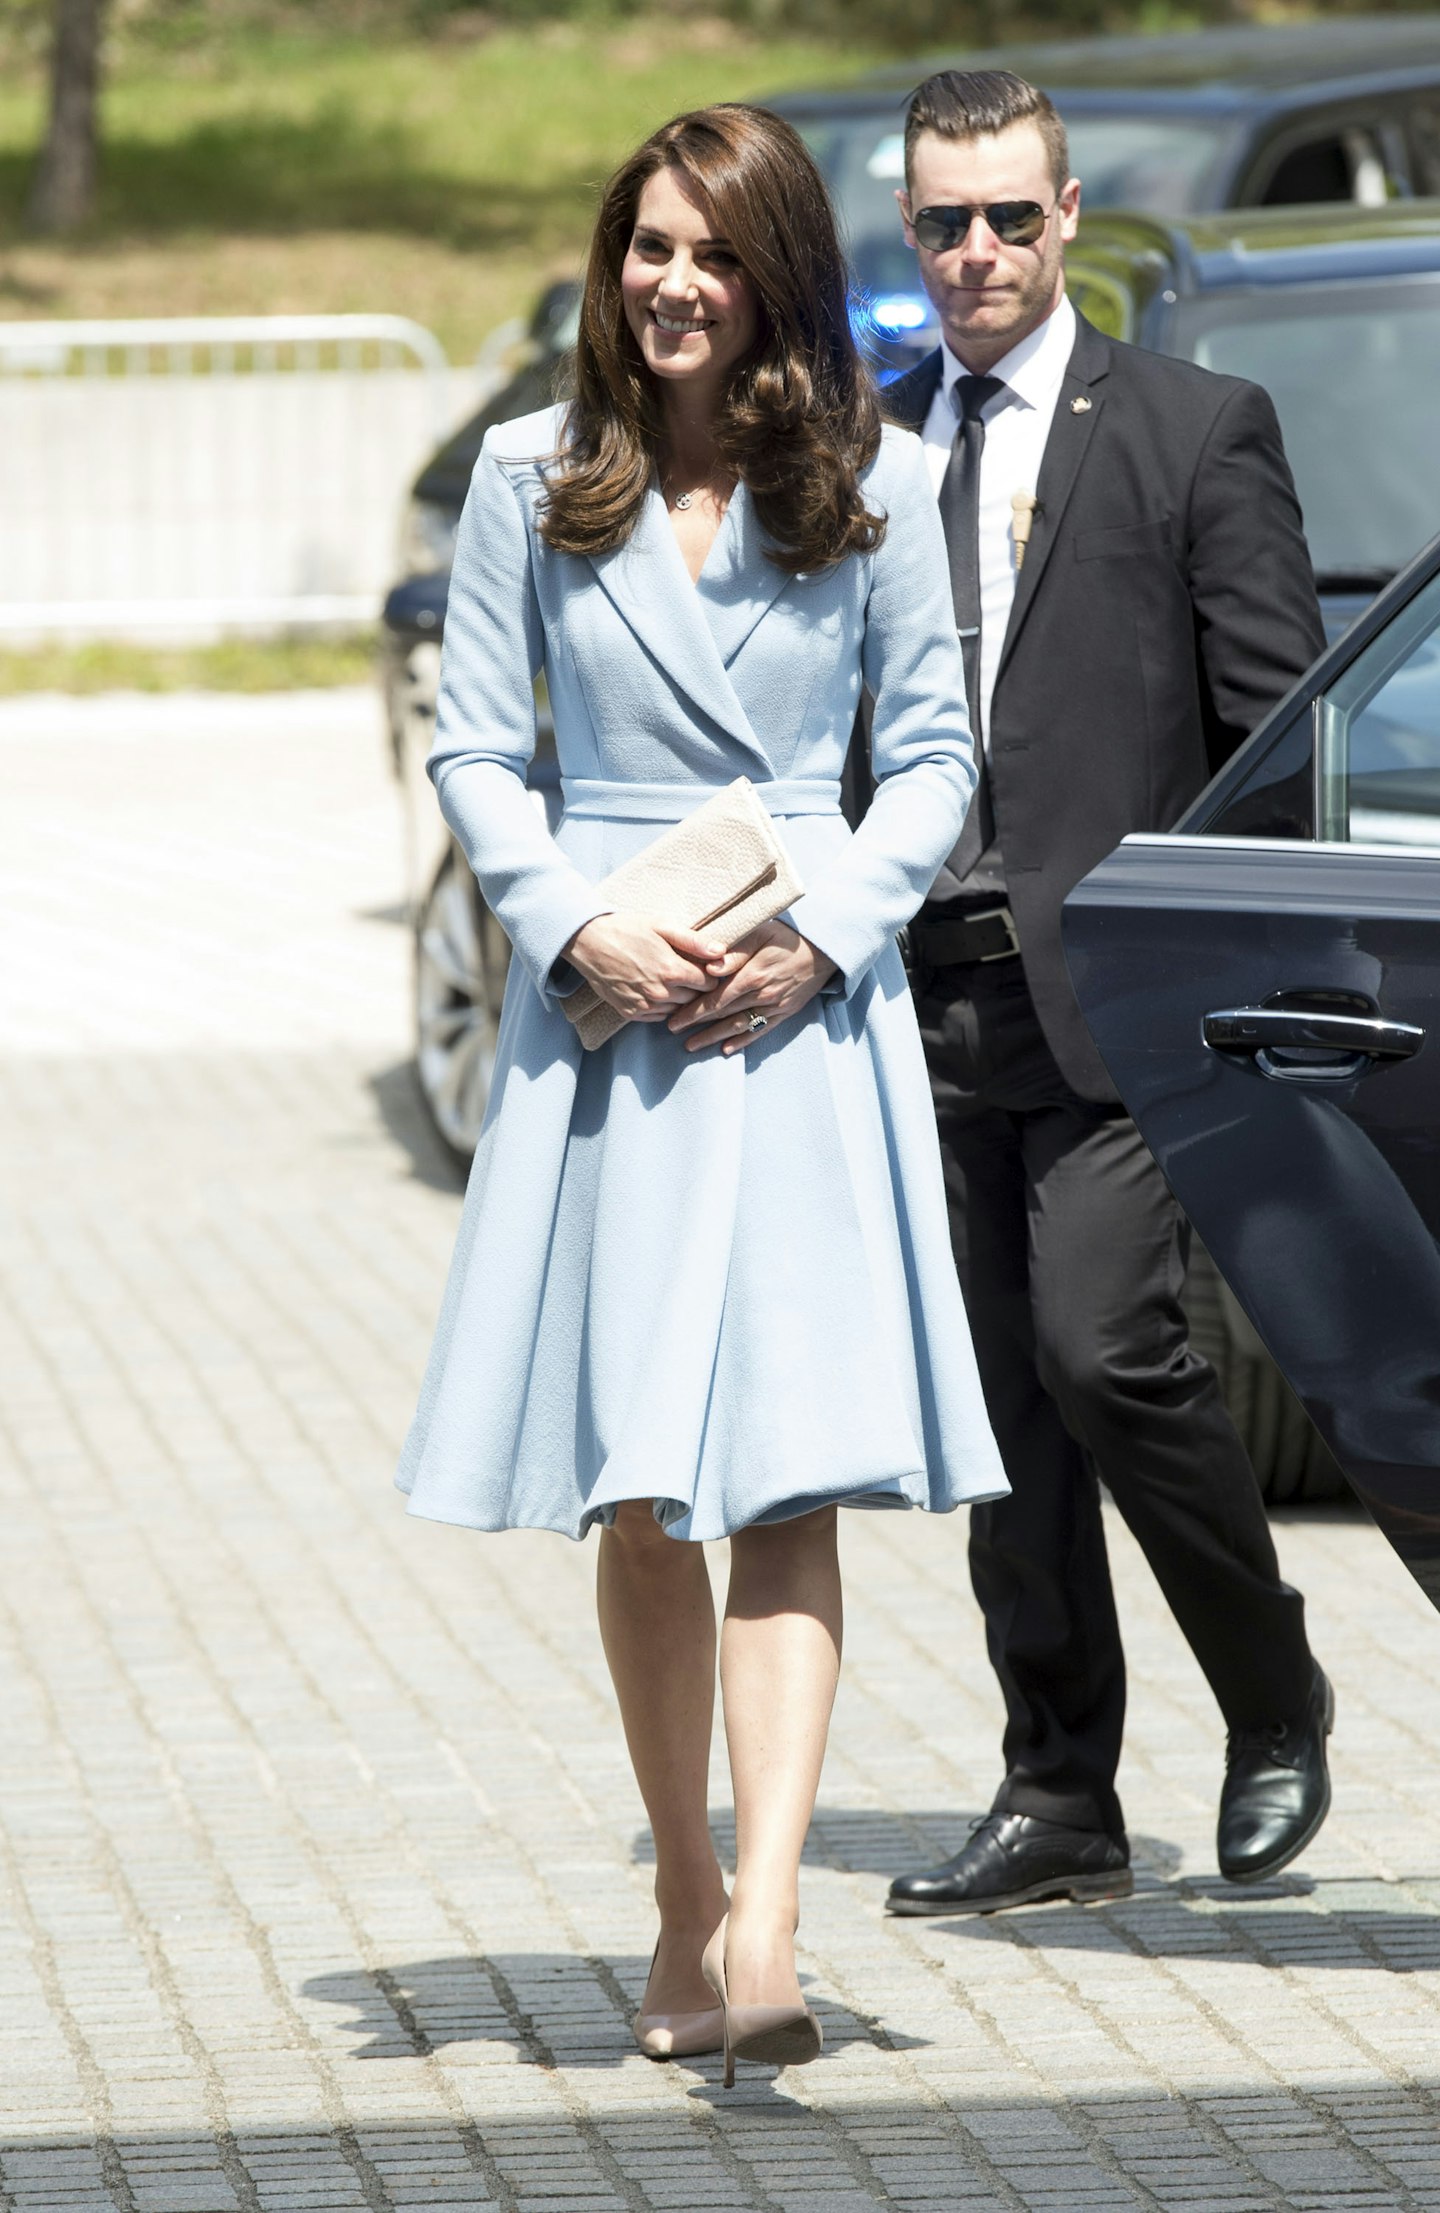 The Duchess wore a pale blue coat dress by Emilia Wickstead